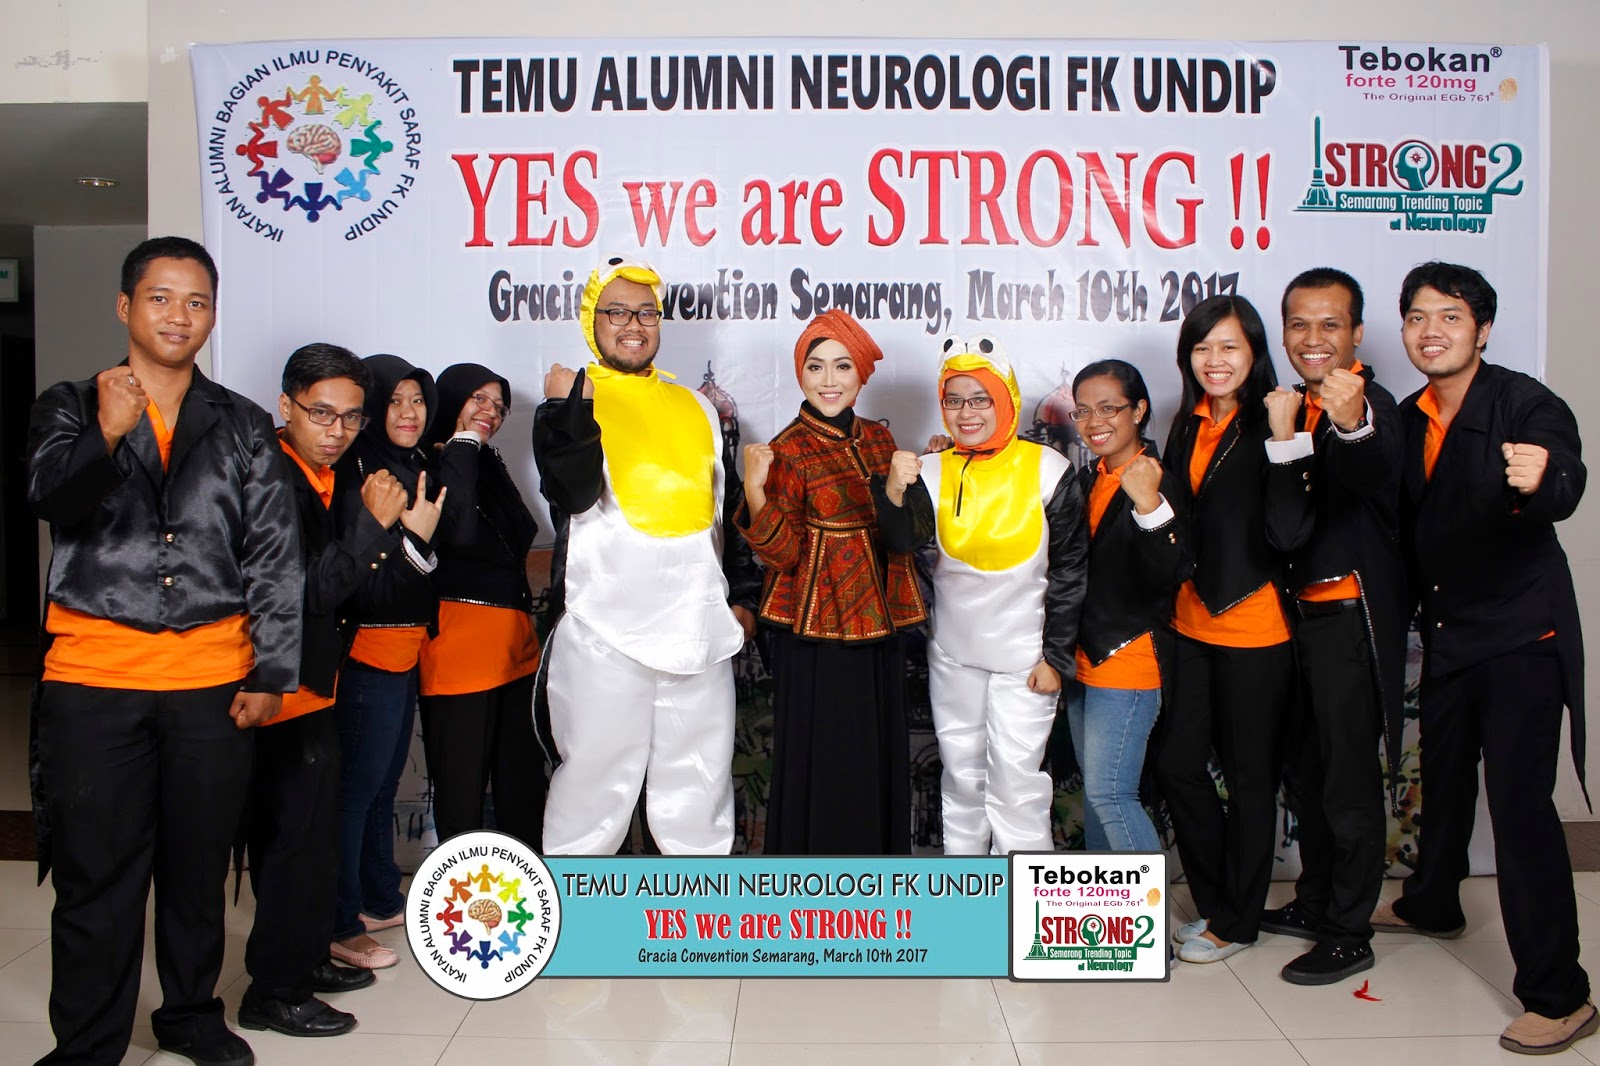  +0856-4020-3369 Photobooth Temu Alumni Neurologi FK UNDIP